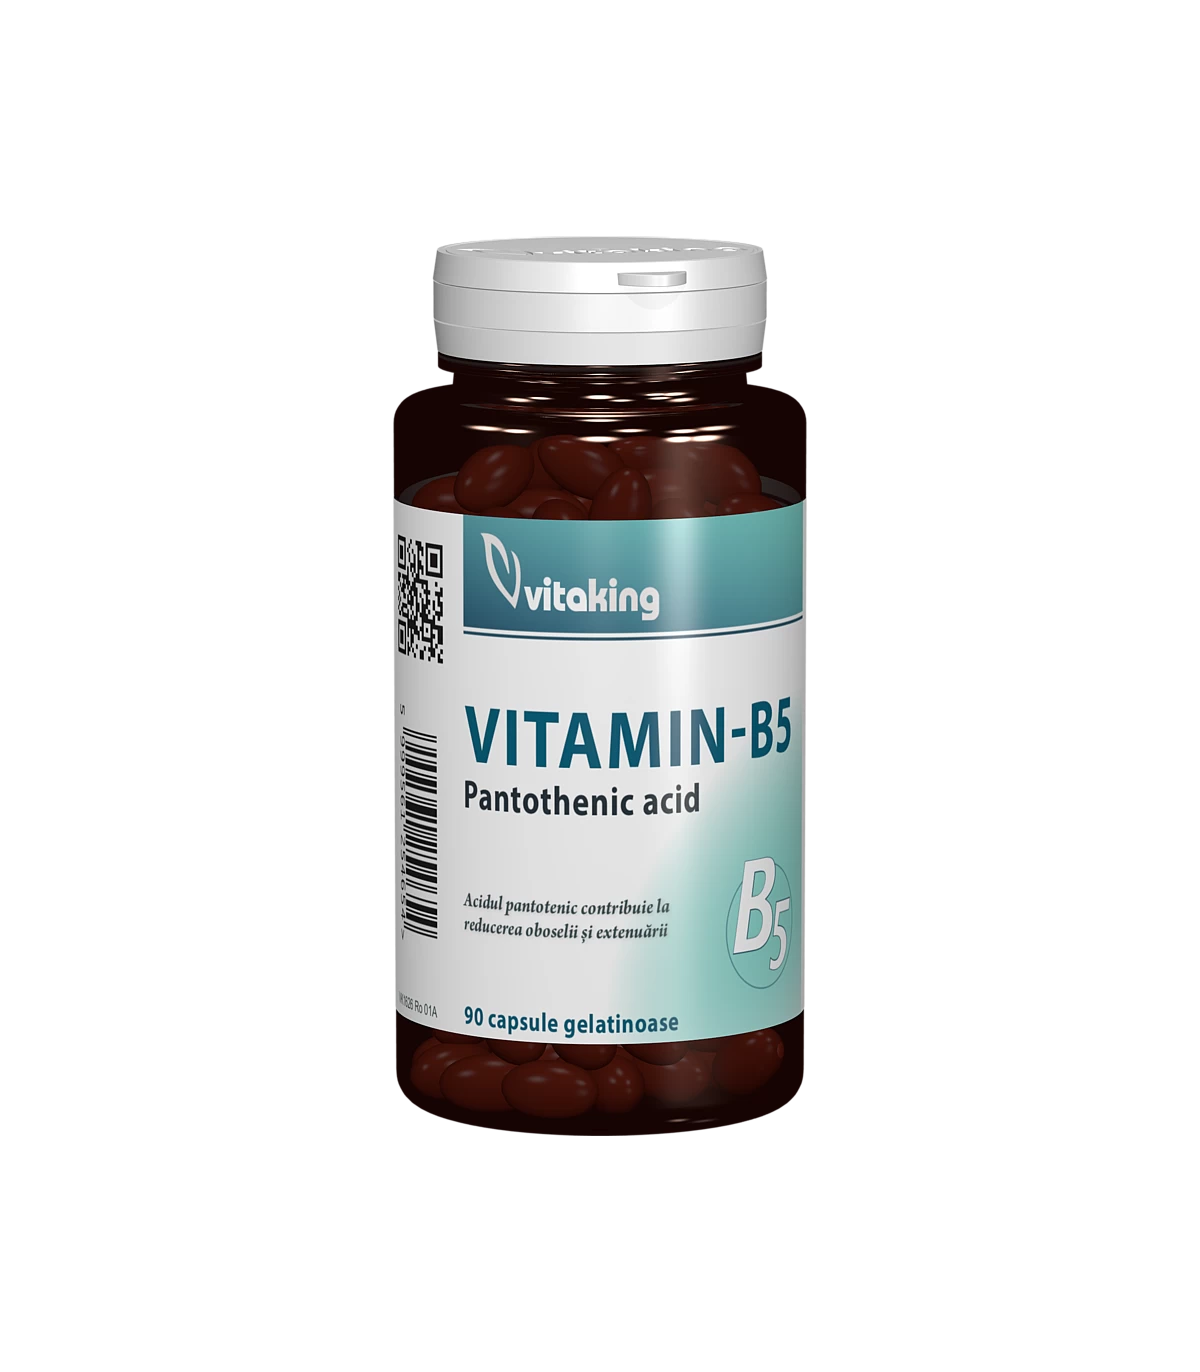 Vitamina b5, acid pantotenic, 200mg, 90cps - vitaking